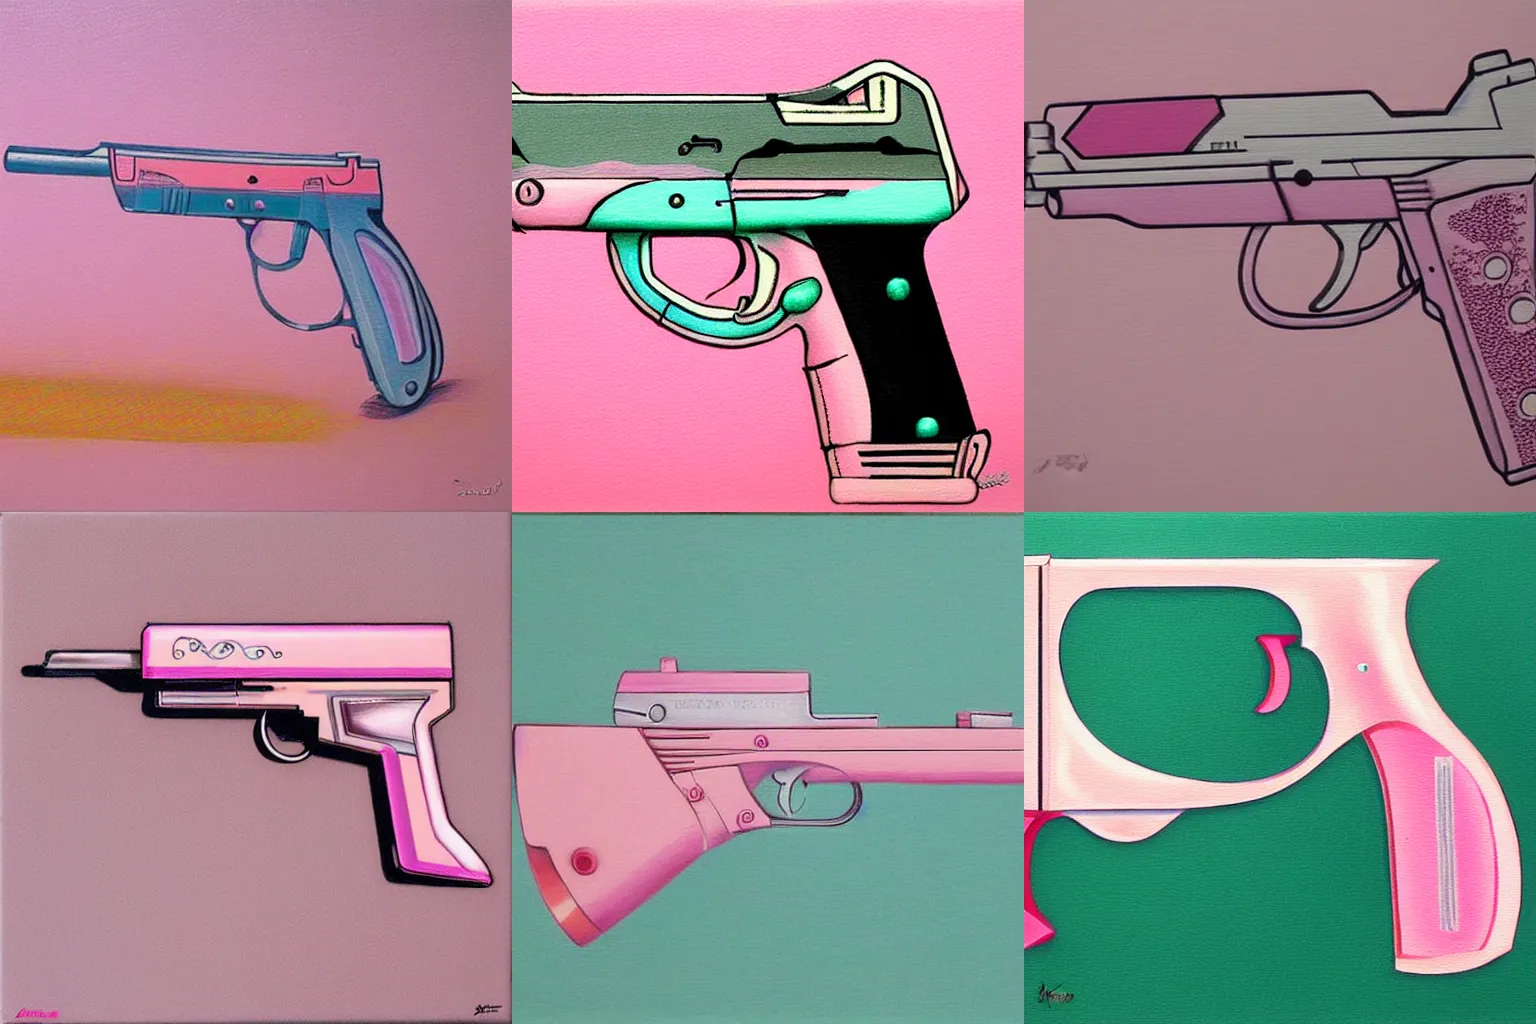 Prompt: futuristic pistol, light pink, Japanese style, cute, painting by leonardo divinci